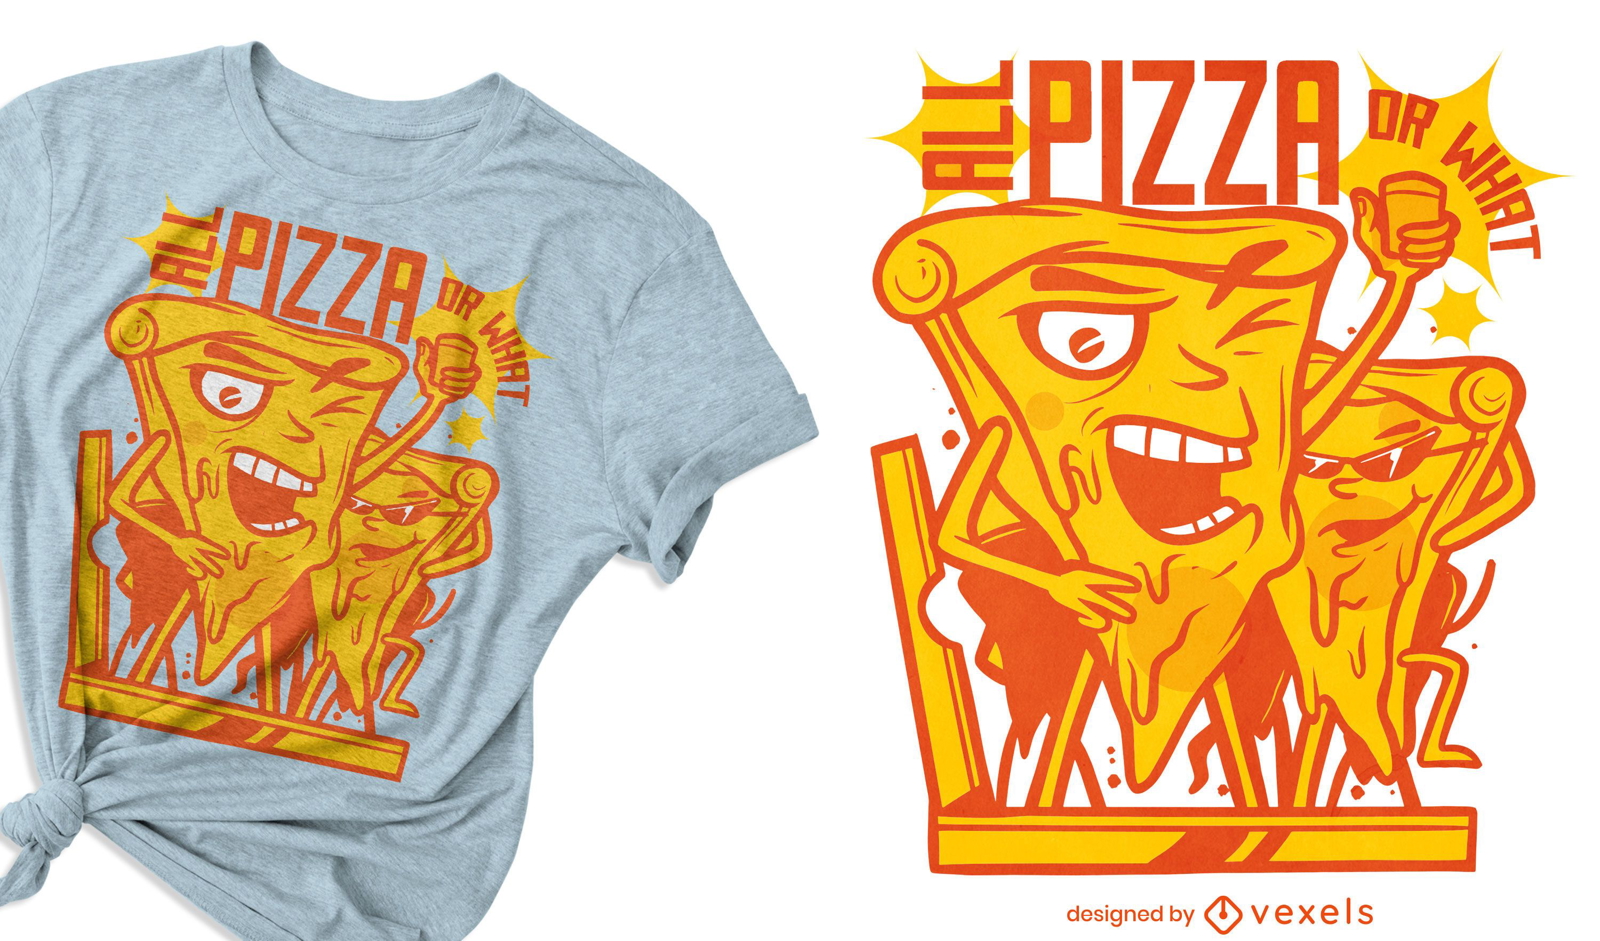 Pizza slice party cartoon t-shirt design